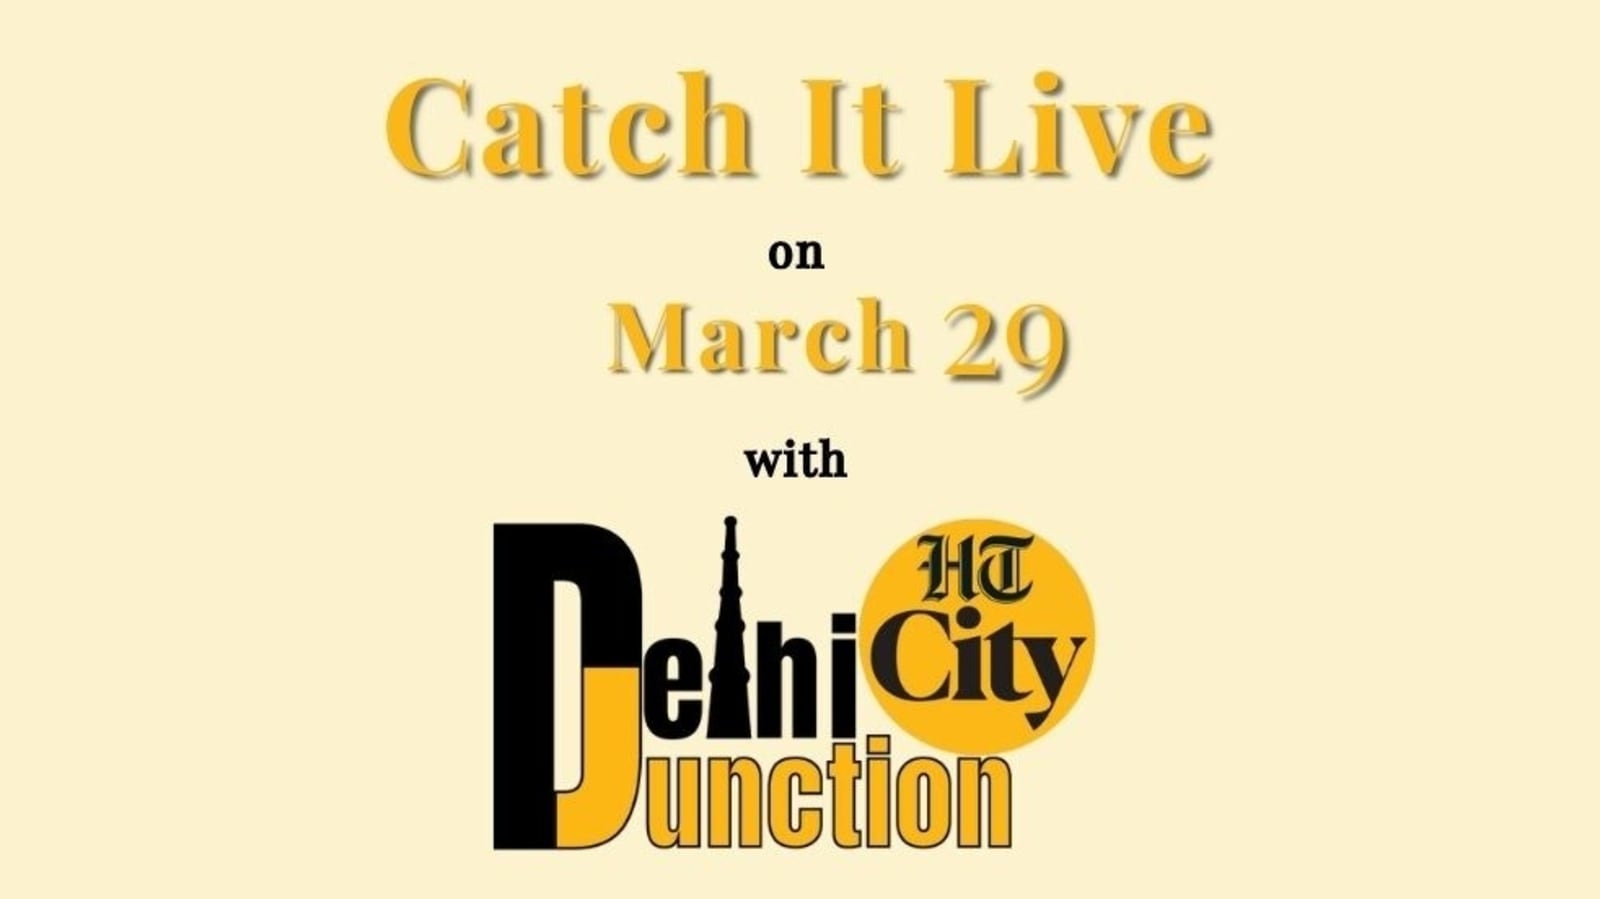 HT City Delhi Junction: Catch It Live on March 29